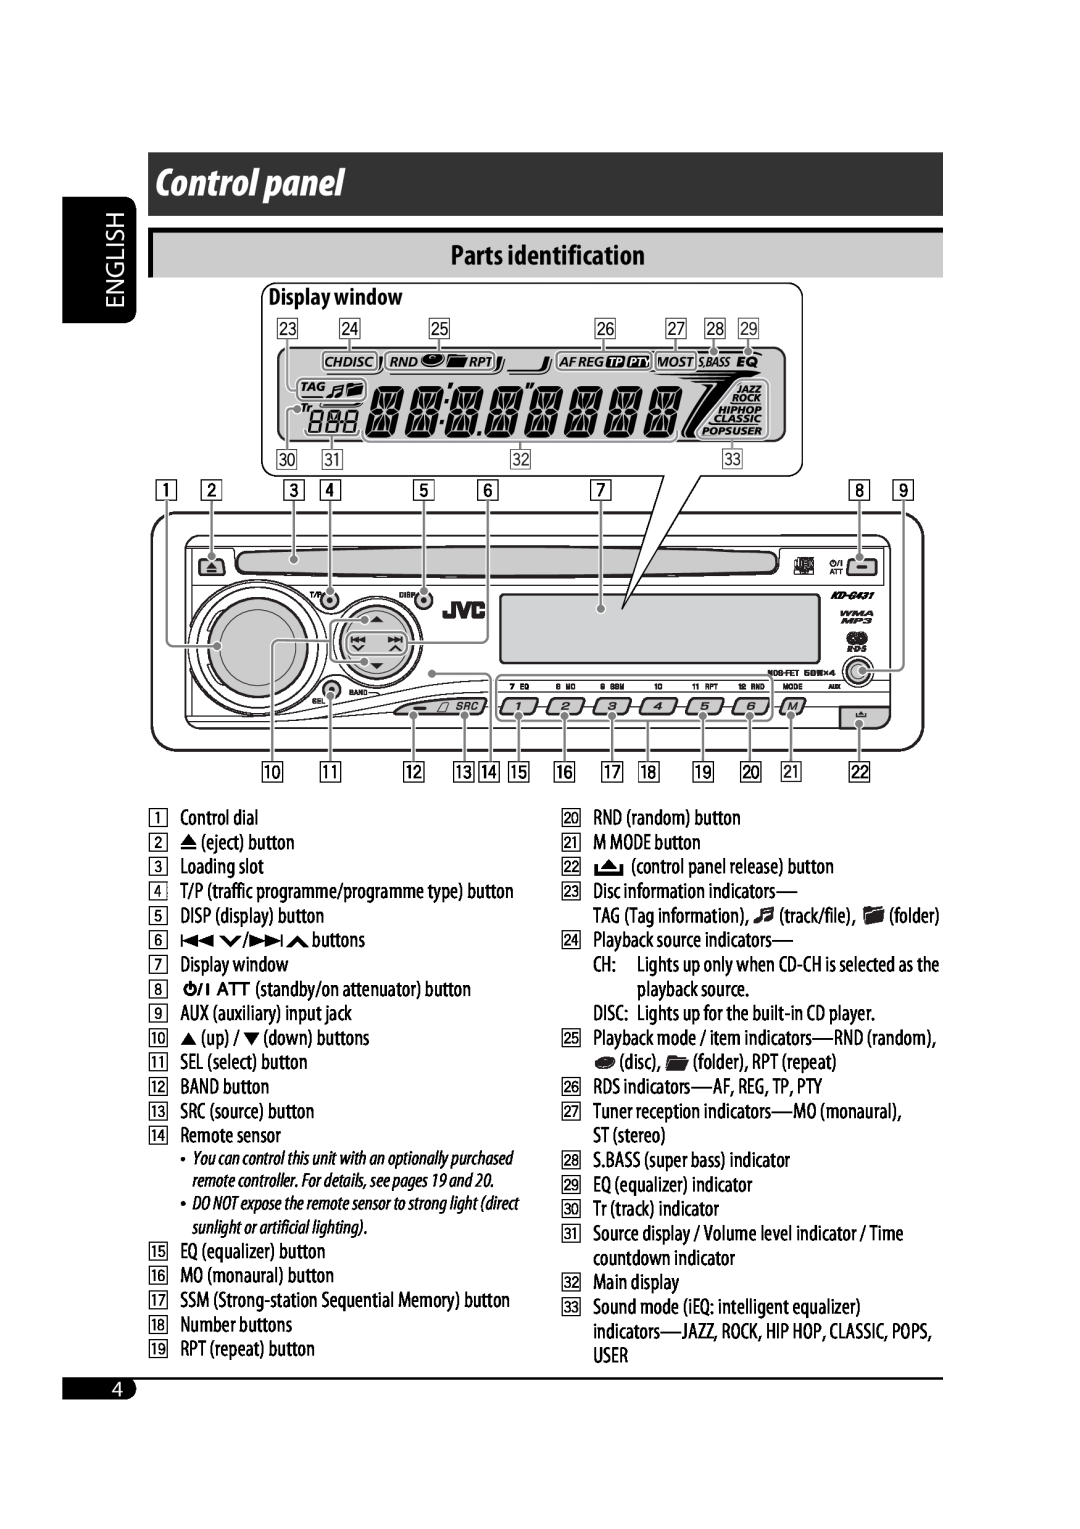 JVC KD-G431 manual Control panel, Parts identification, Display window, English 